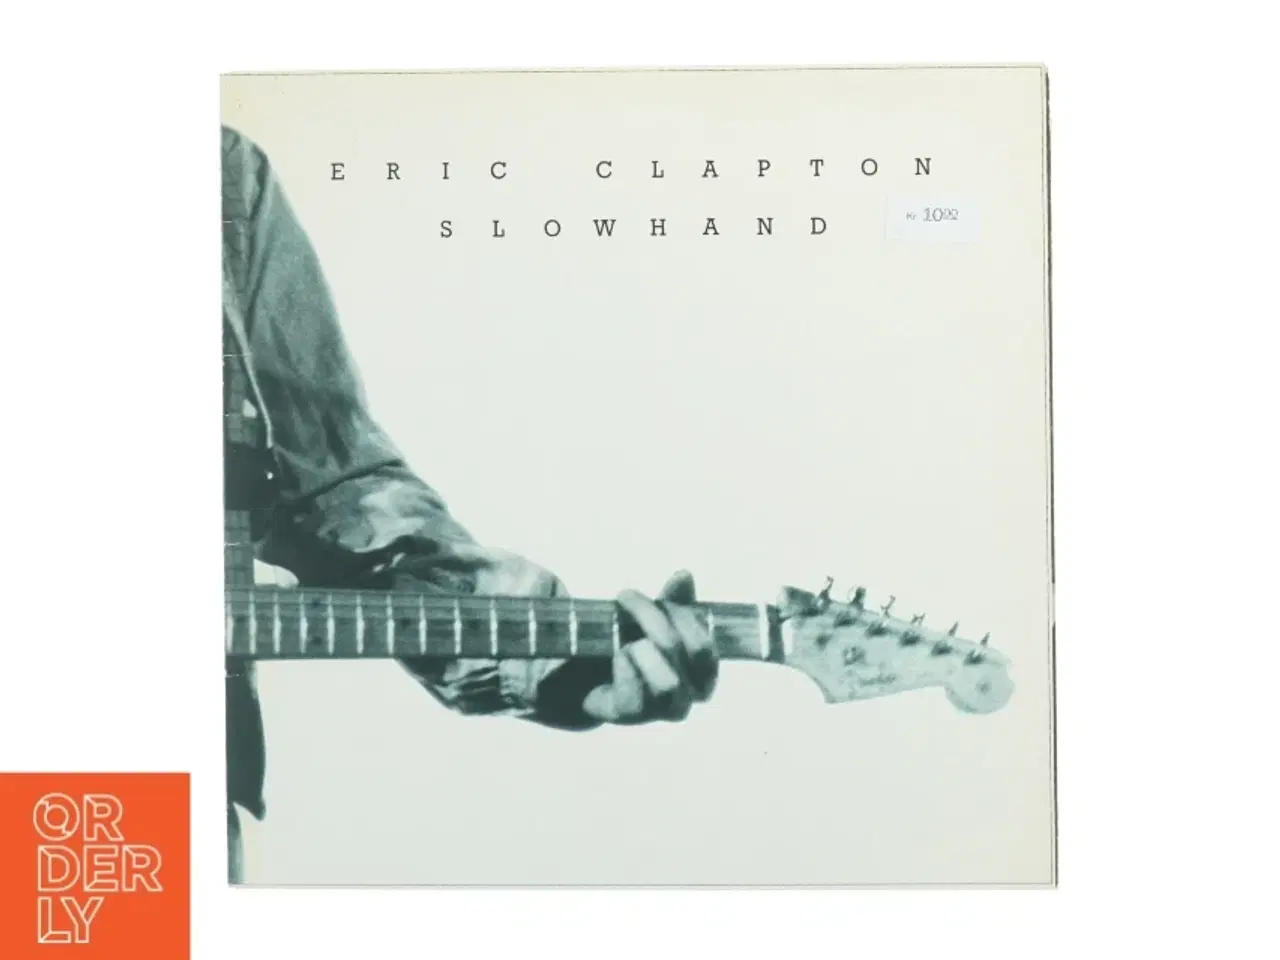 Billede 1 - Eric Clapton - Slowhand LP fra RSO Records (str. 31 x 31 cm)